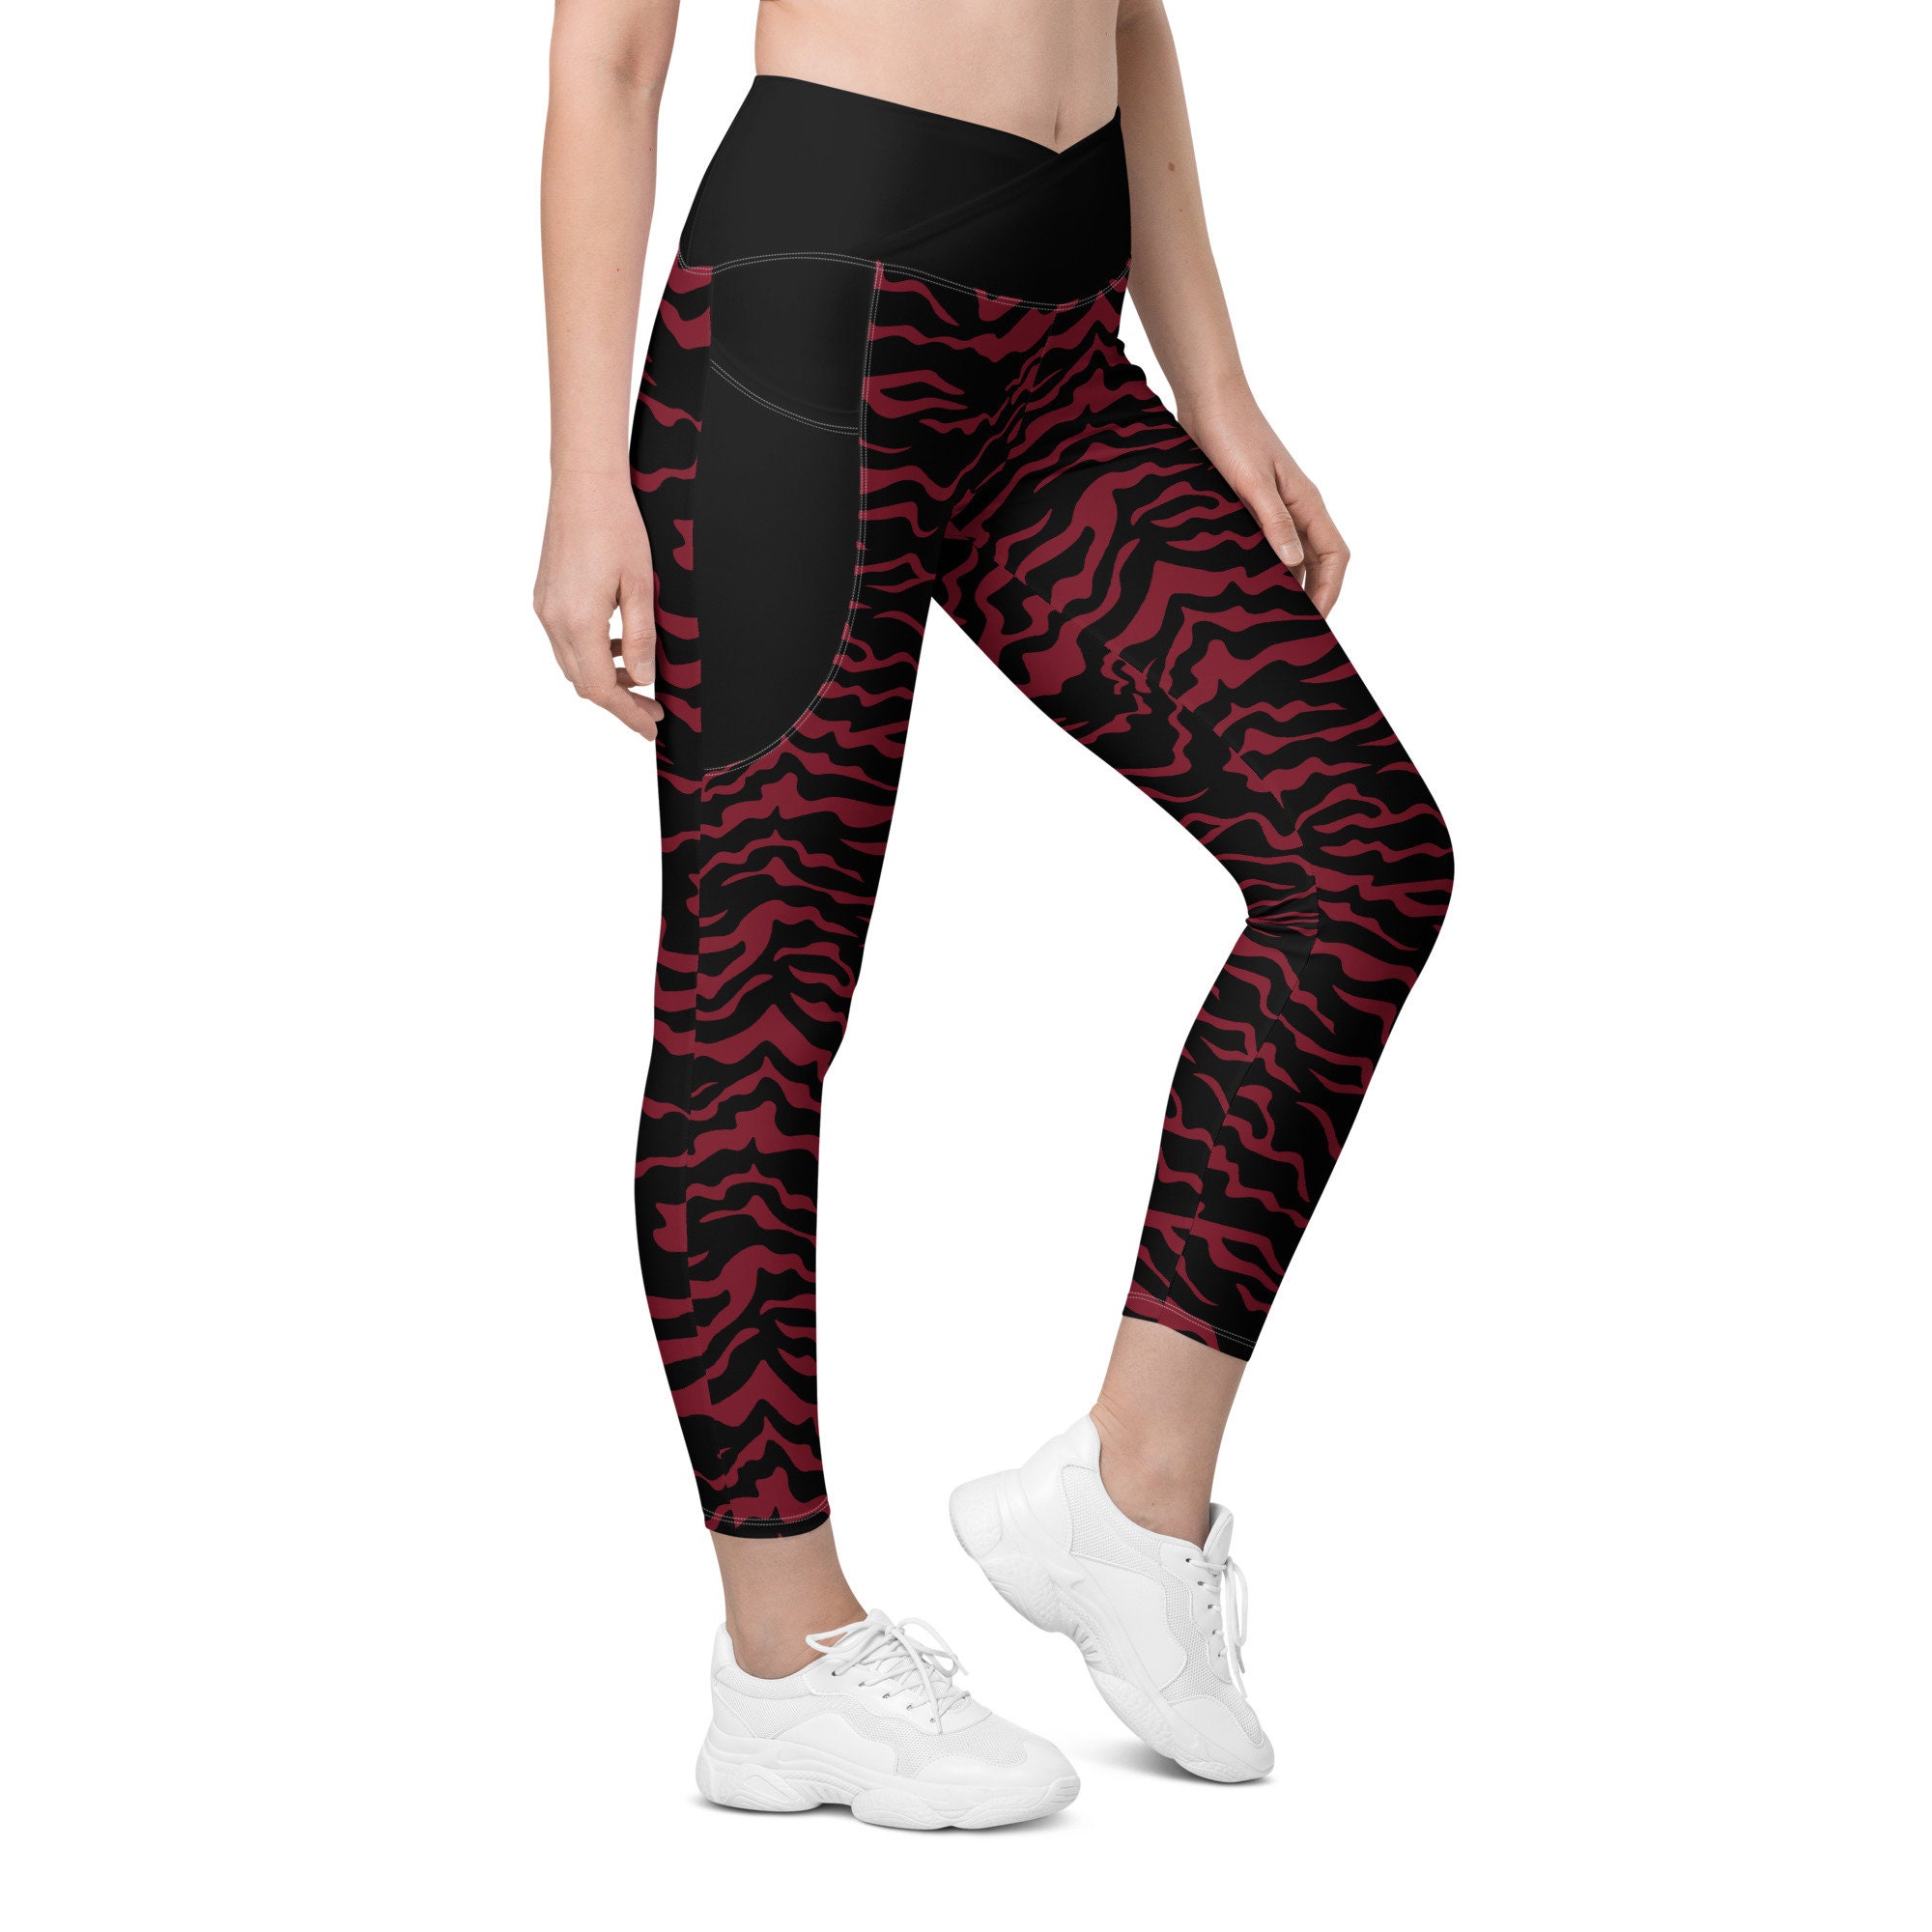 Jungle Gym Fitness Leggings With Pockets, Tiger Stripes Yoga Pants